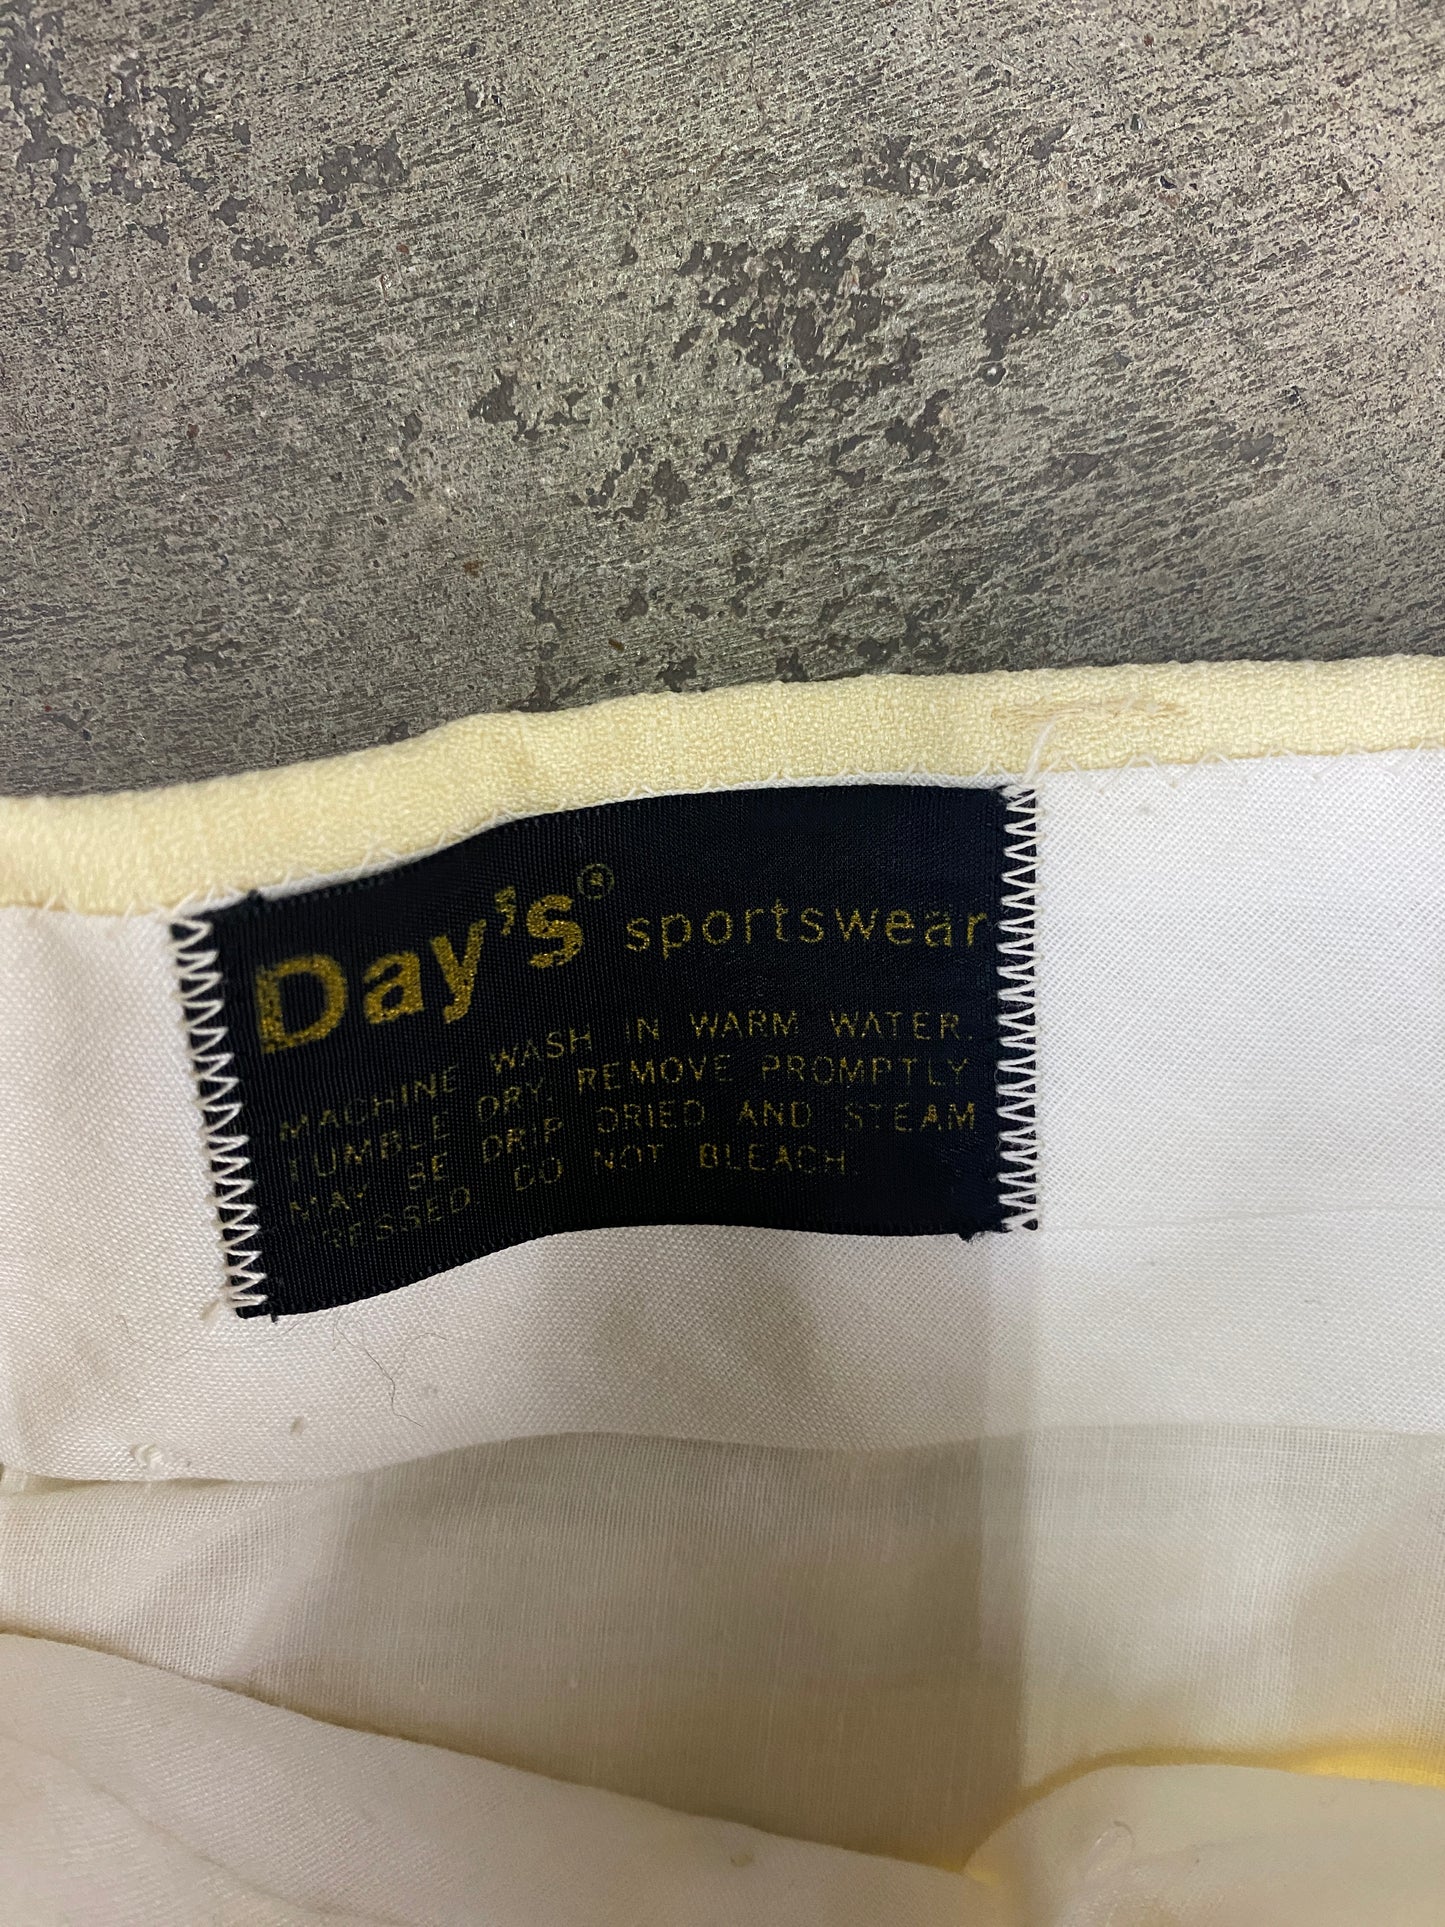 VTG Day's Sportswear Cream Dress Pants Sz 32x34